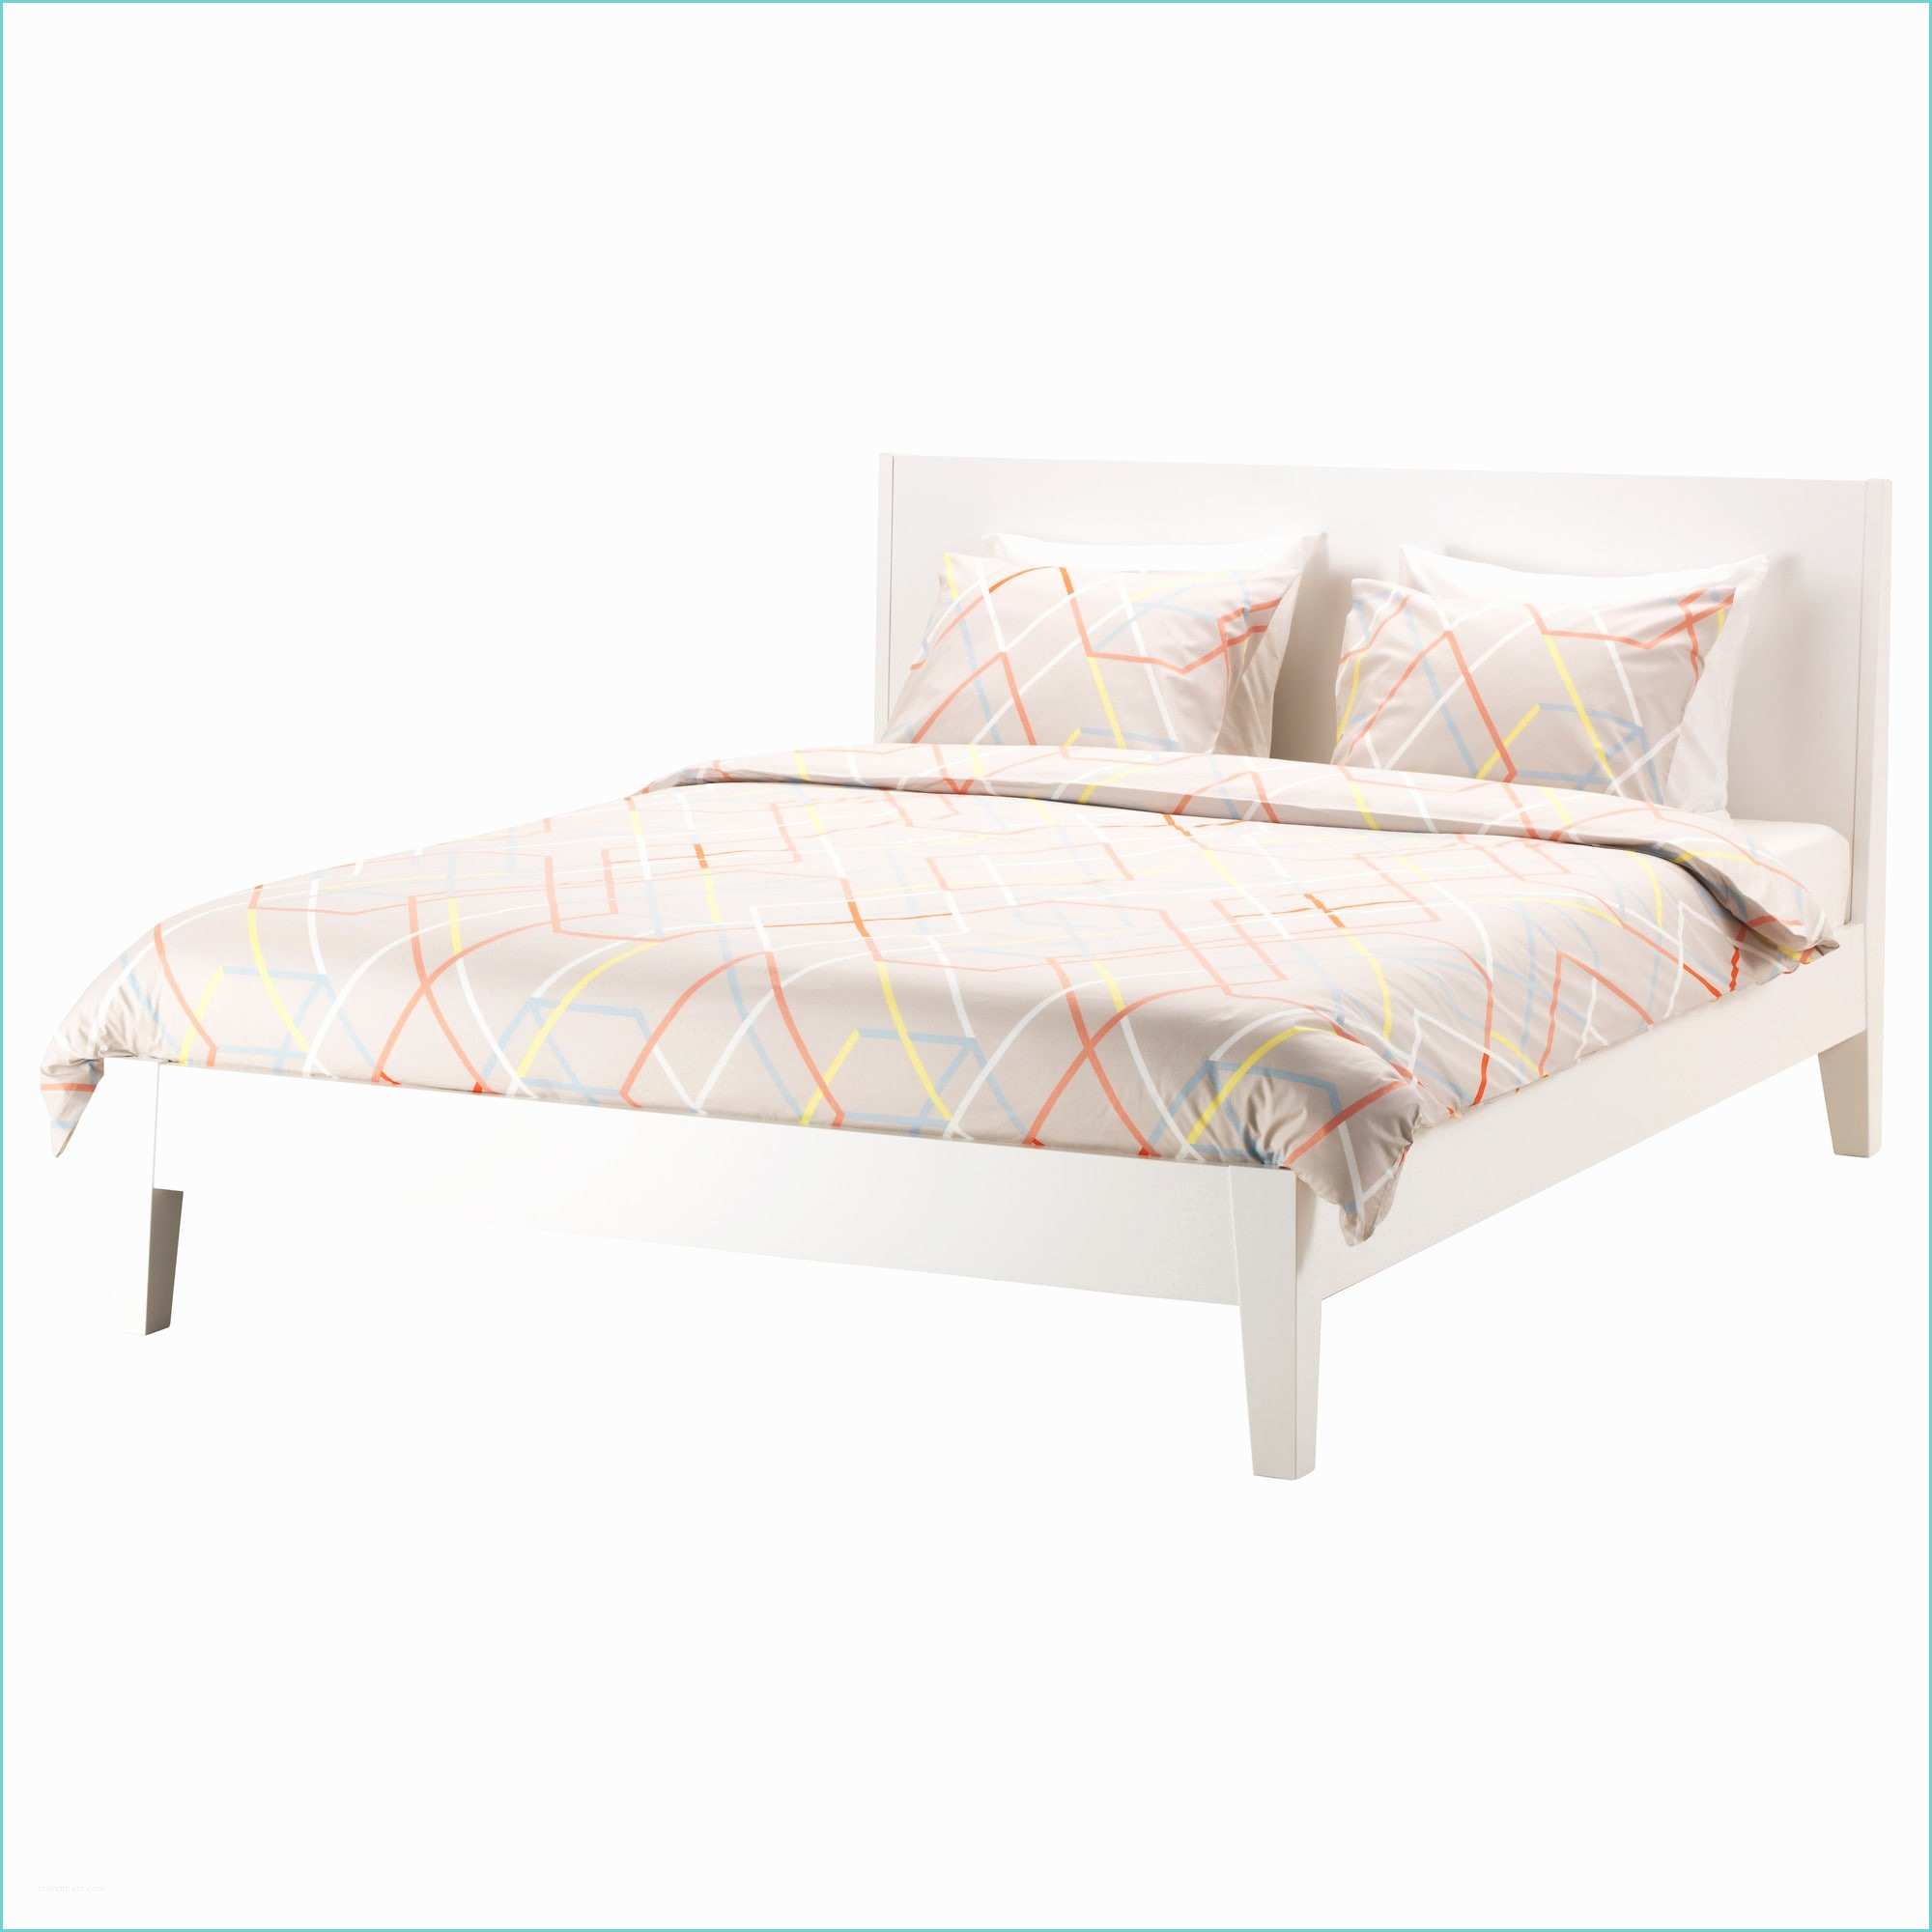 Leirsund Slatted Bed Base Adjustable nordli Bed Frame White Leirsund Standard Double Ikea